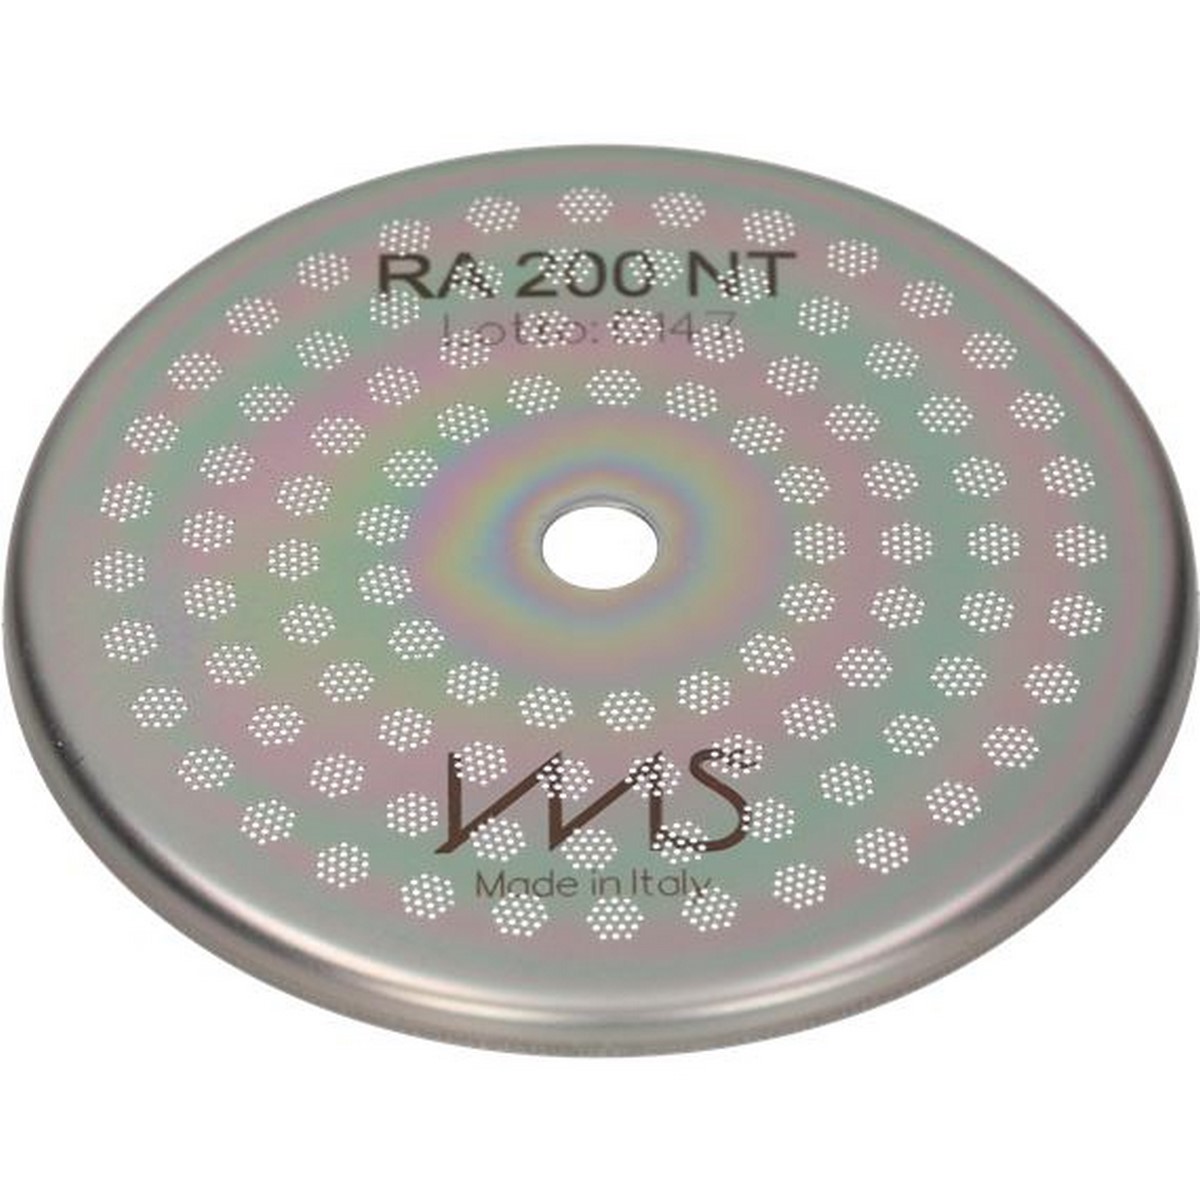 Acquista online Shower IMS Filtri RA 200 NT (RA200NT)